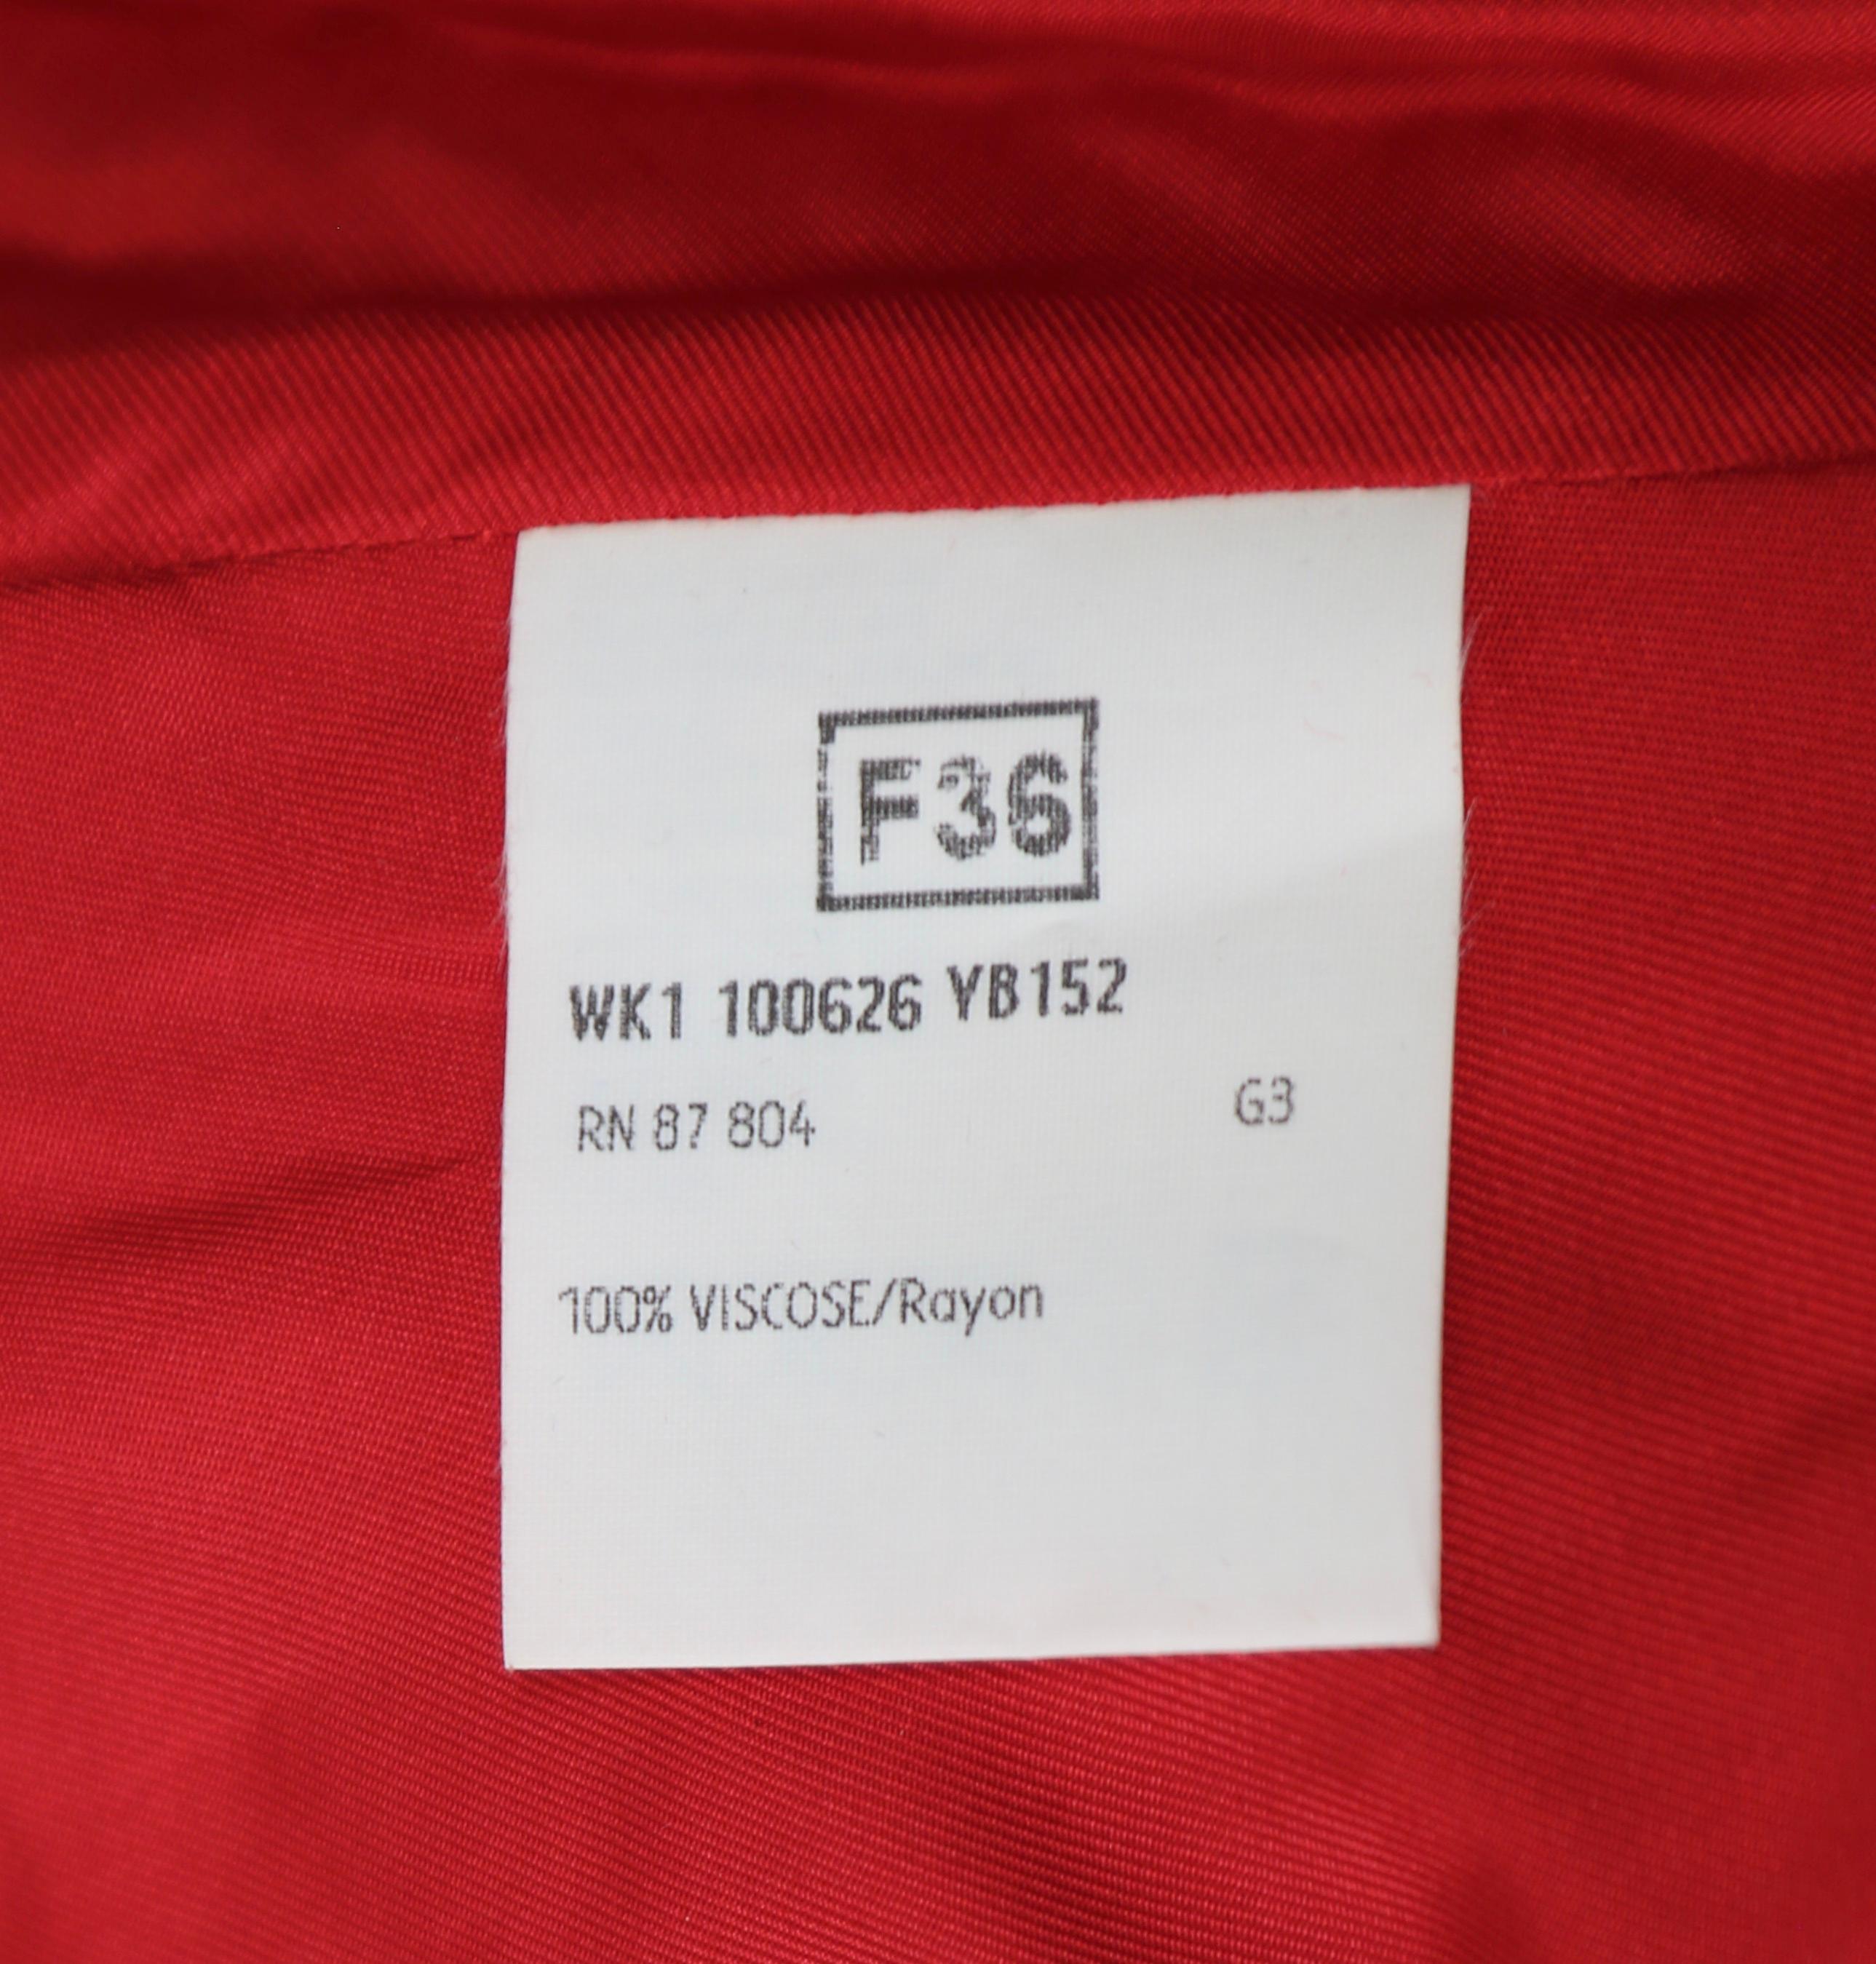 NEW 2002 TOM FORD YVES SAINT LAURENT claret embroidered runway jacket - unworn For Sale 8